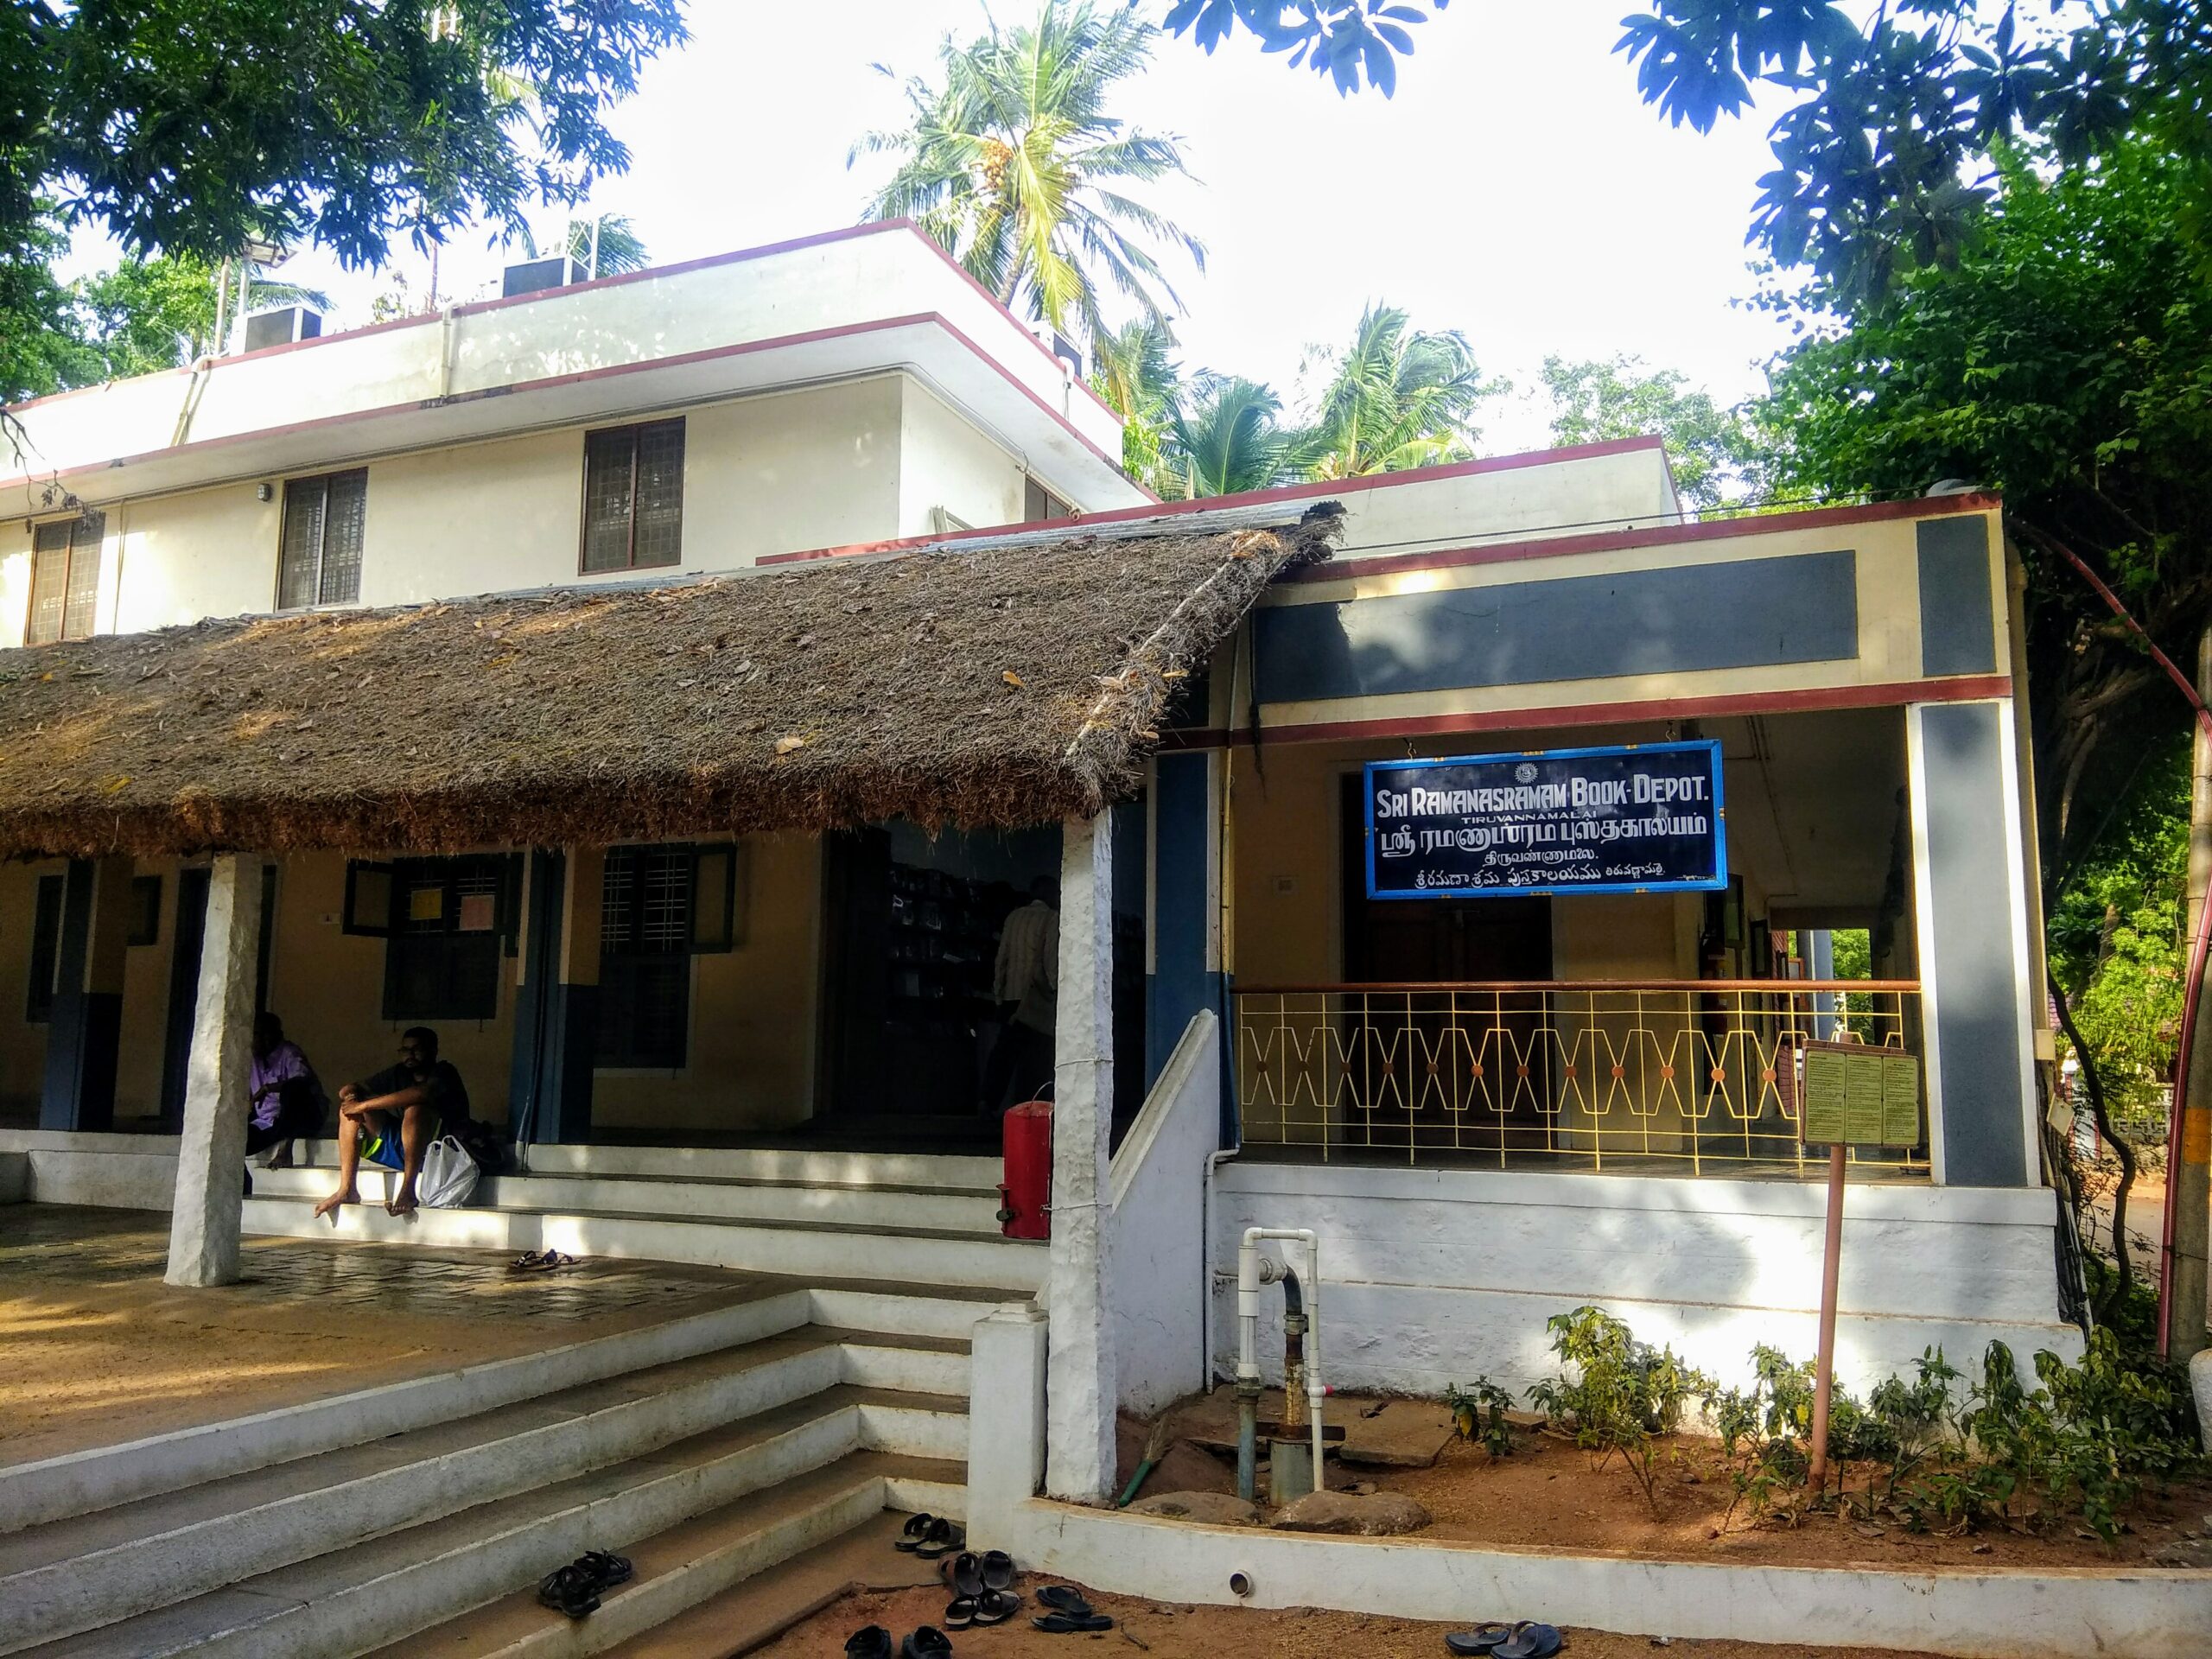 Ramanasramam and the Old Hall